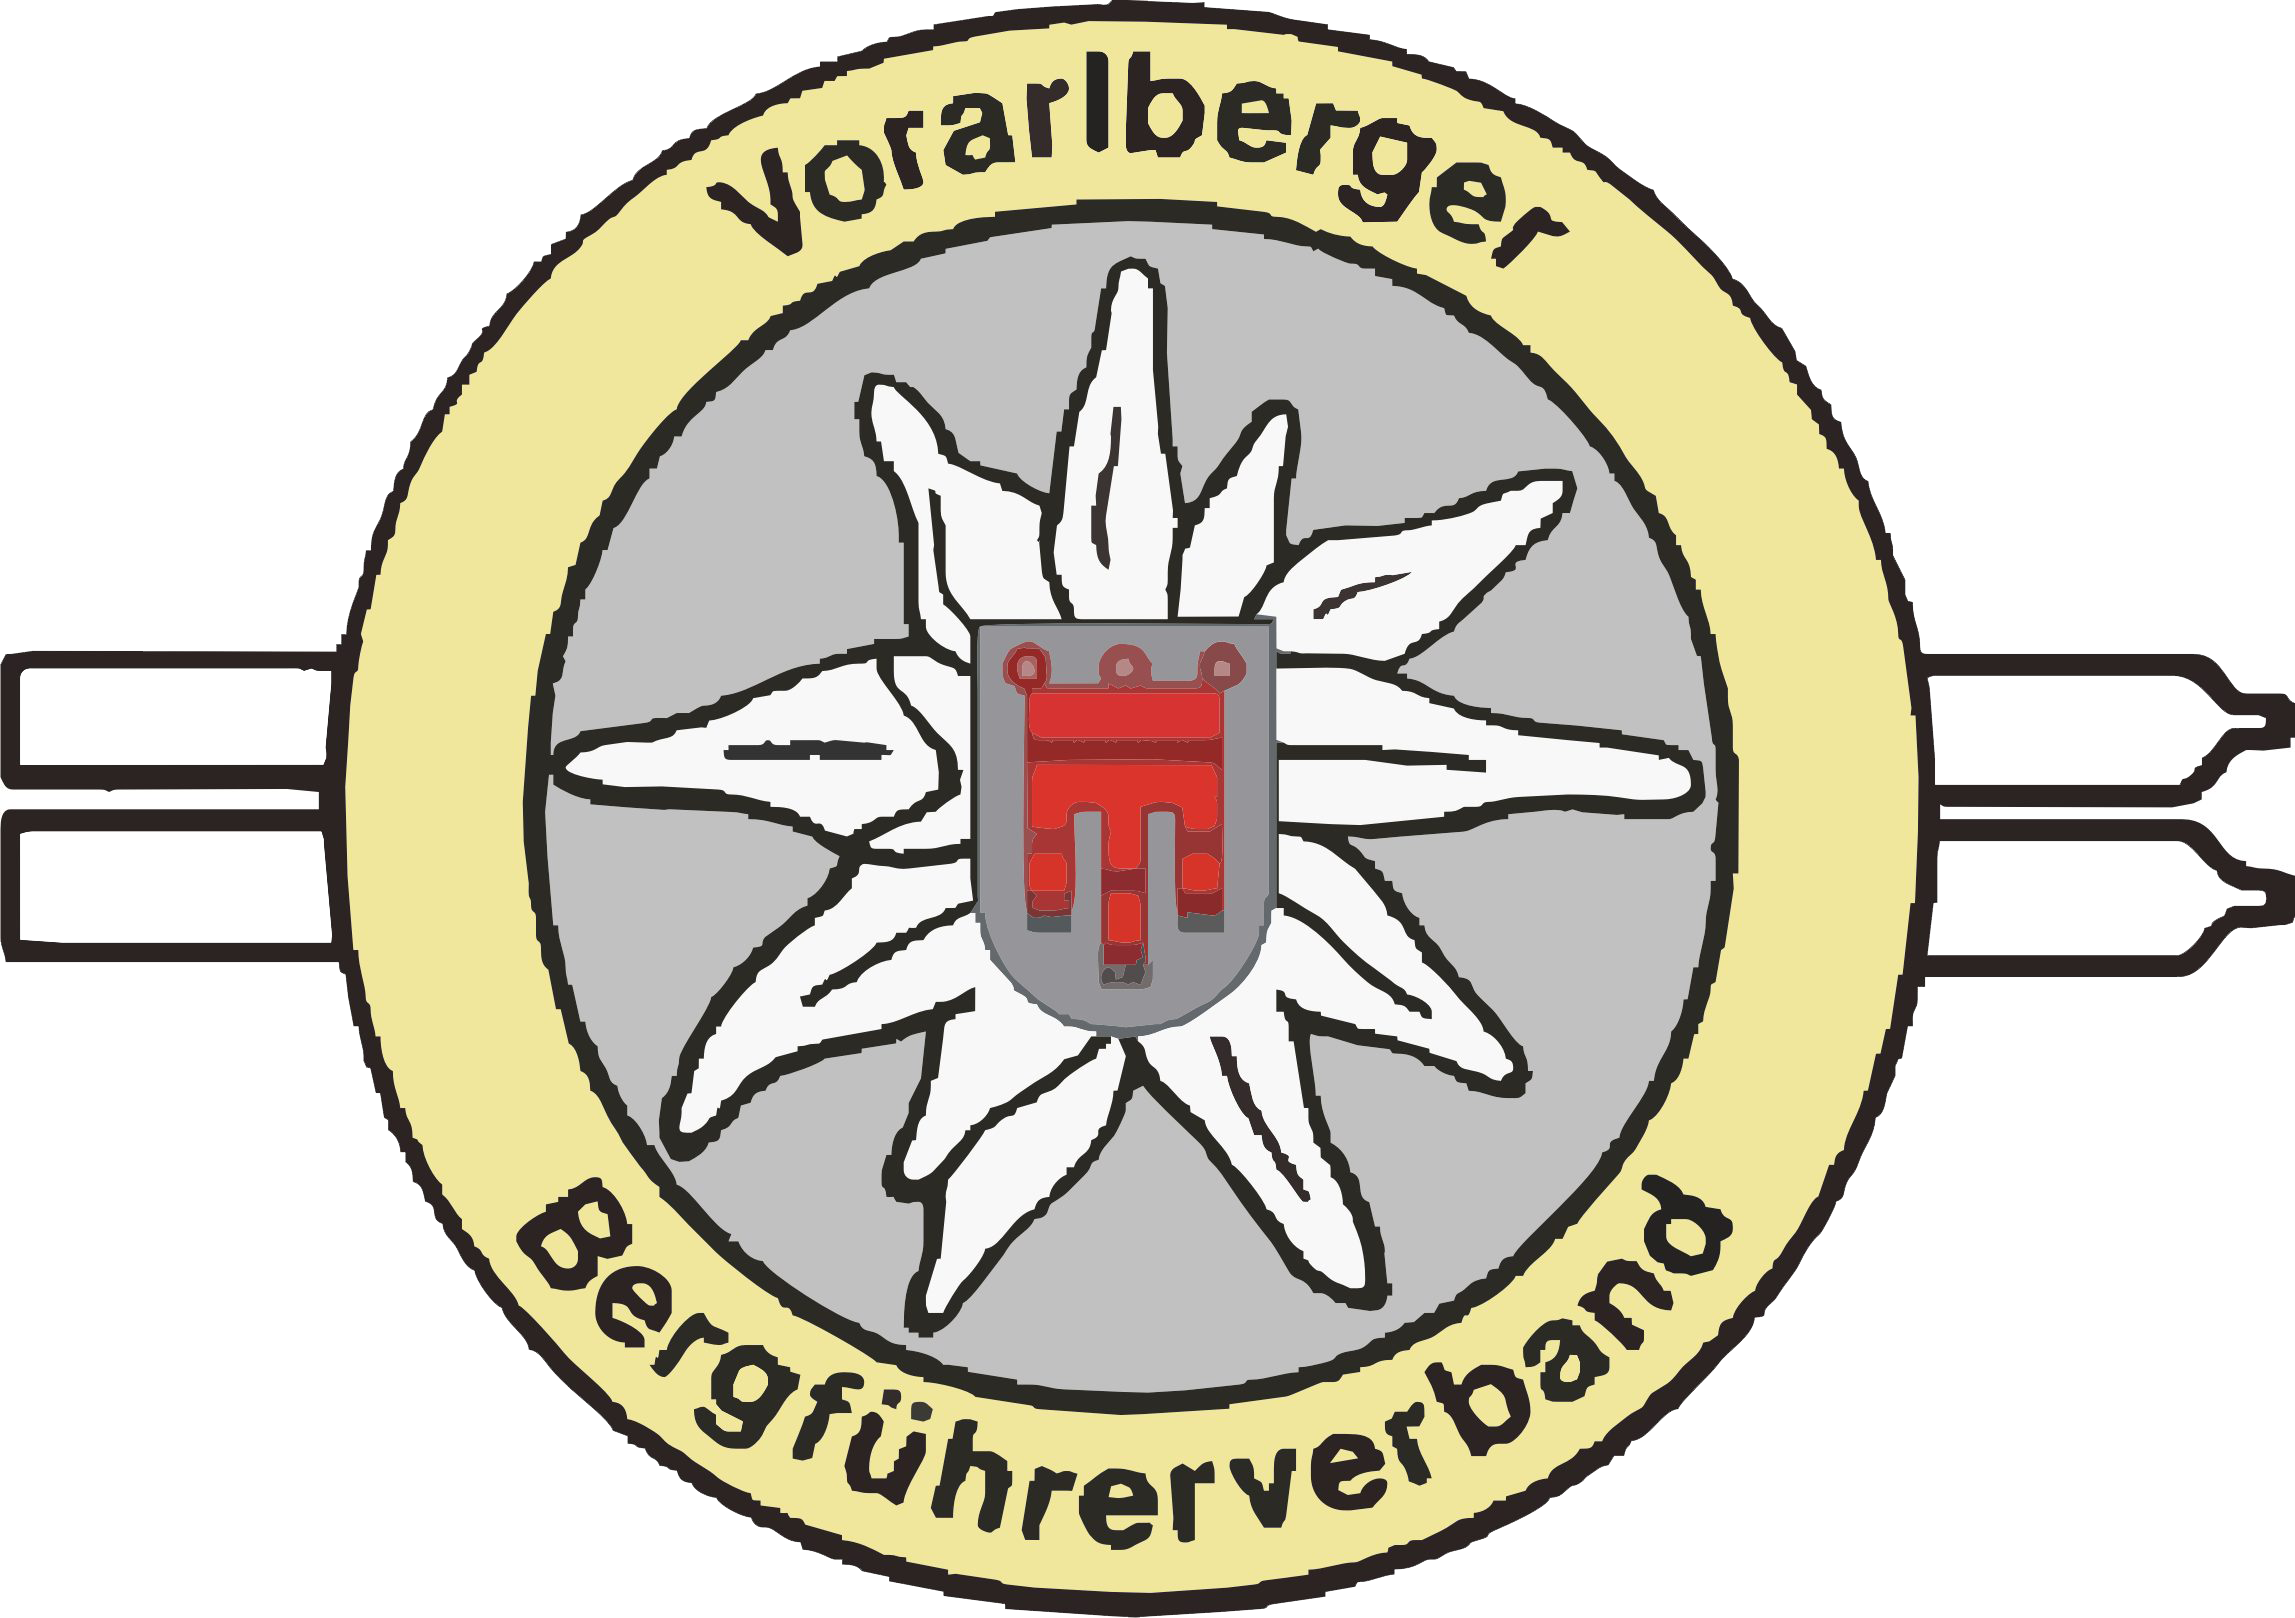 Vorarlberger Bergführer Logo